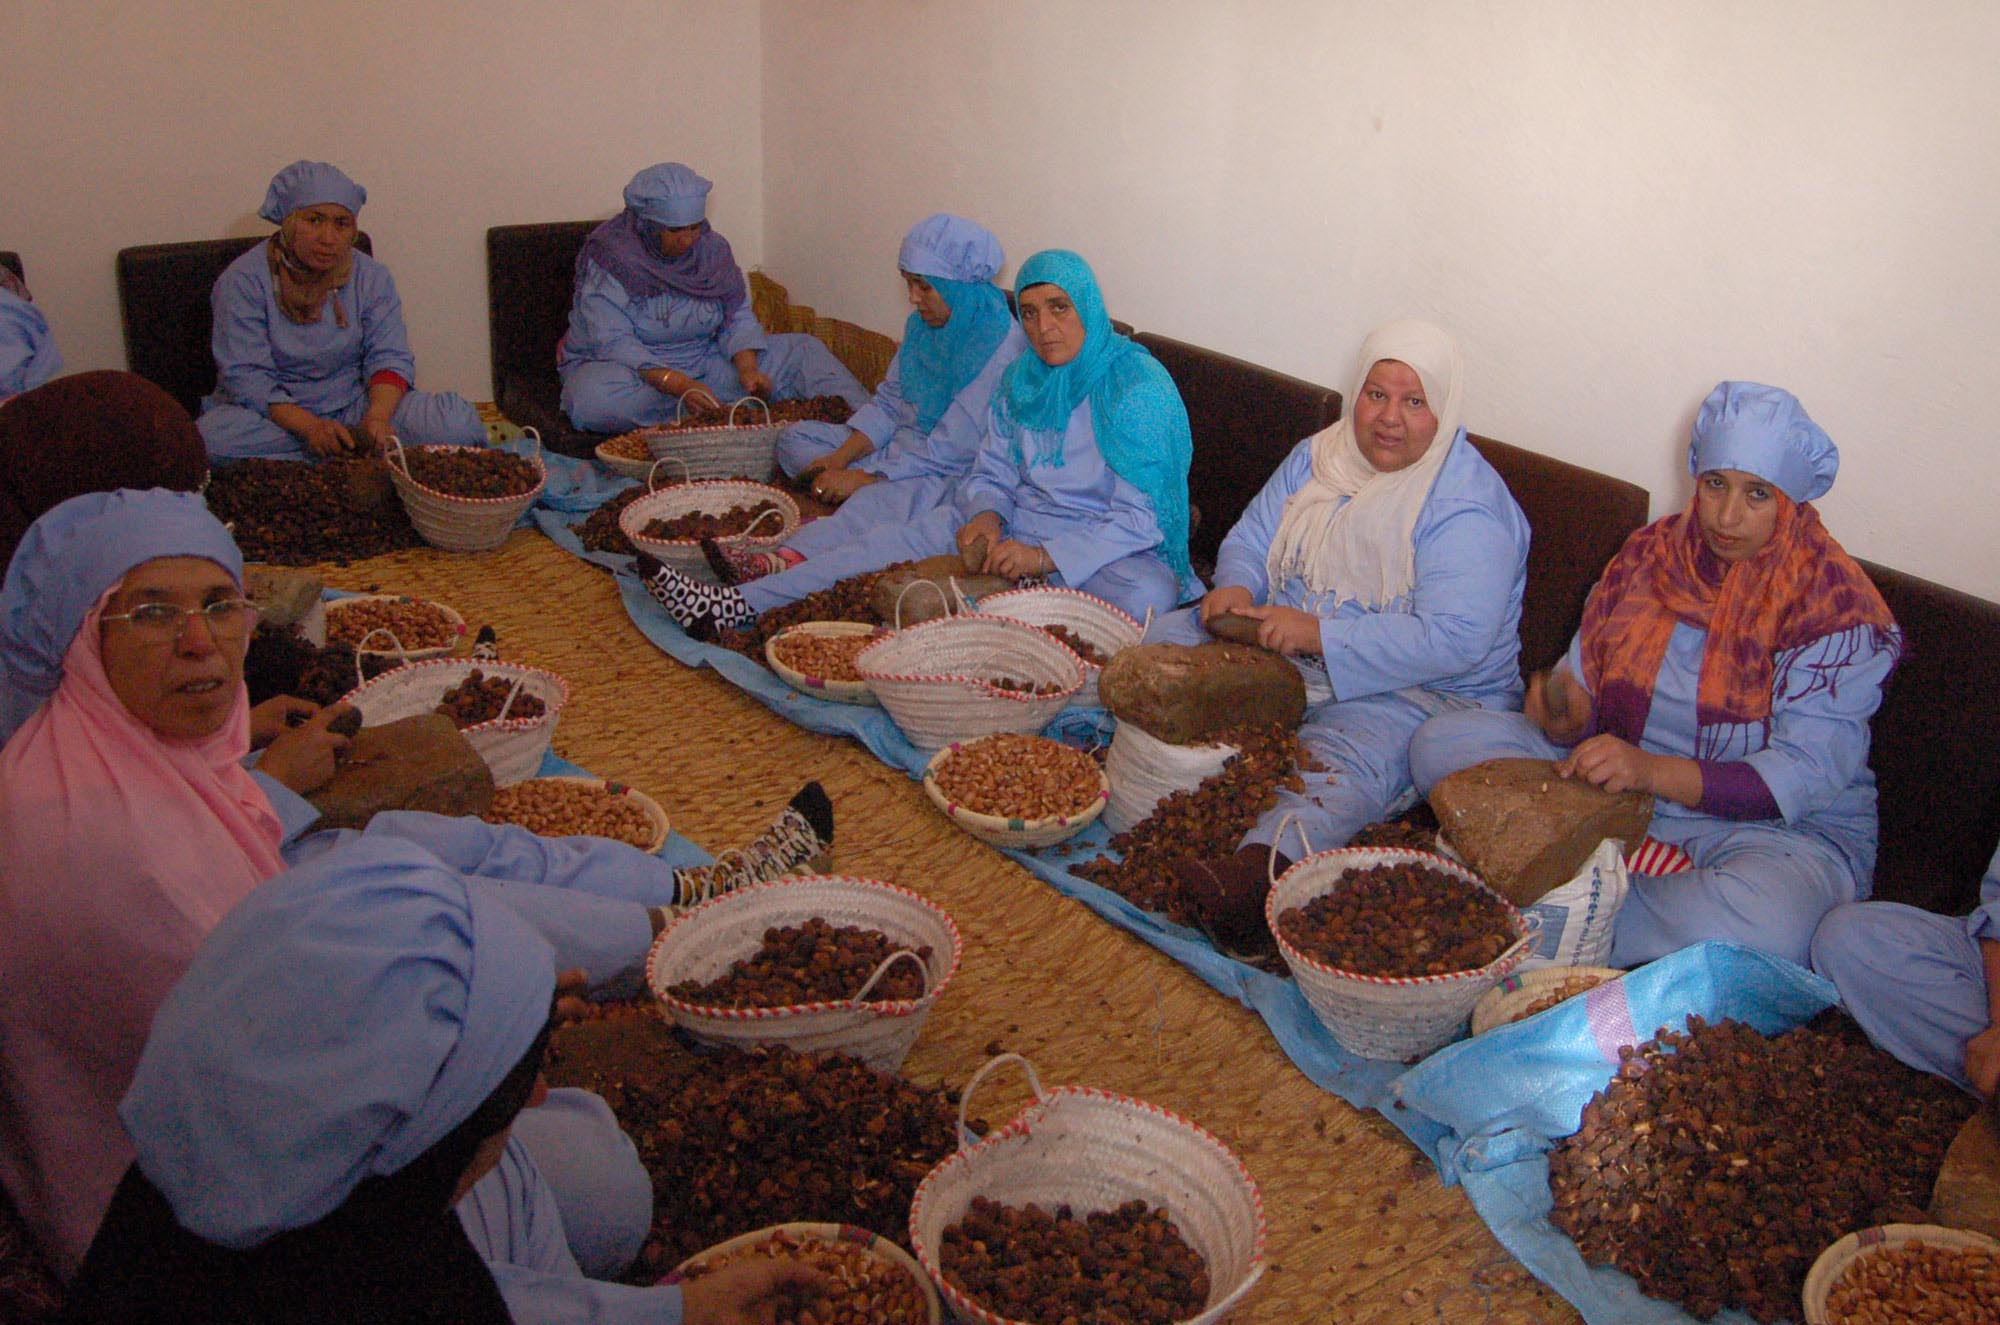 Moroccan women sorting Argan fruits to make oil for cosmetics.